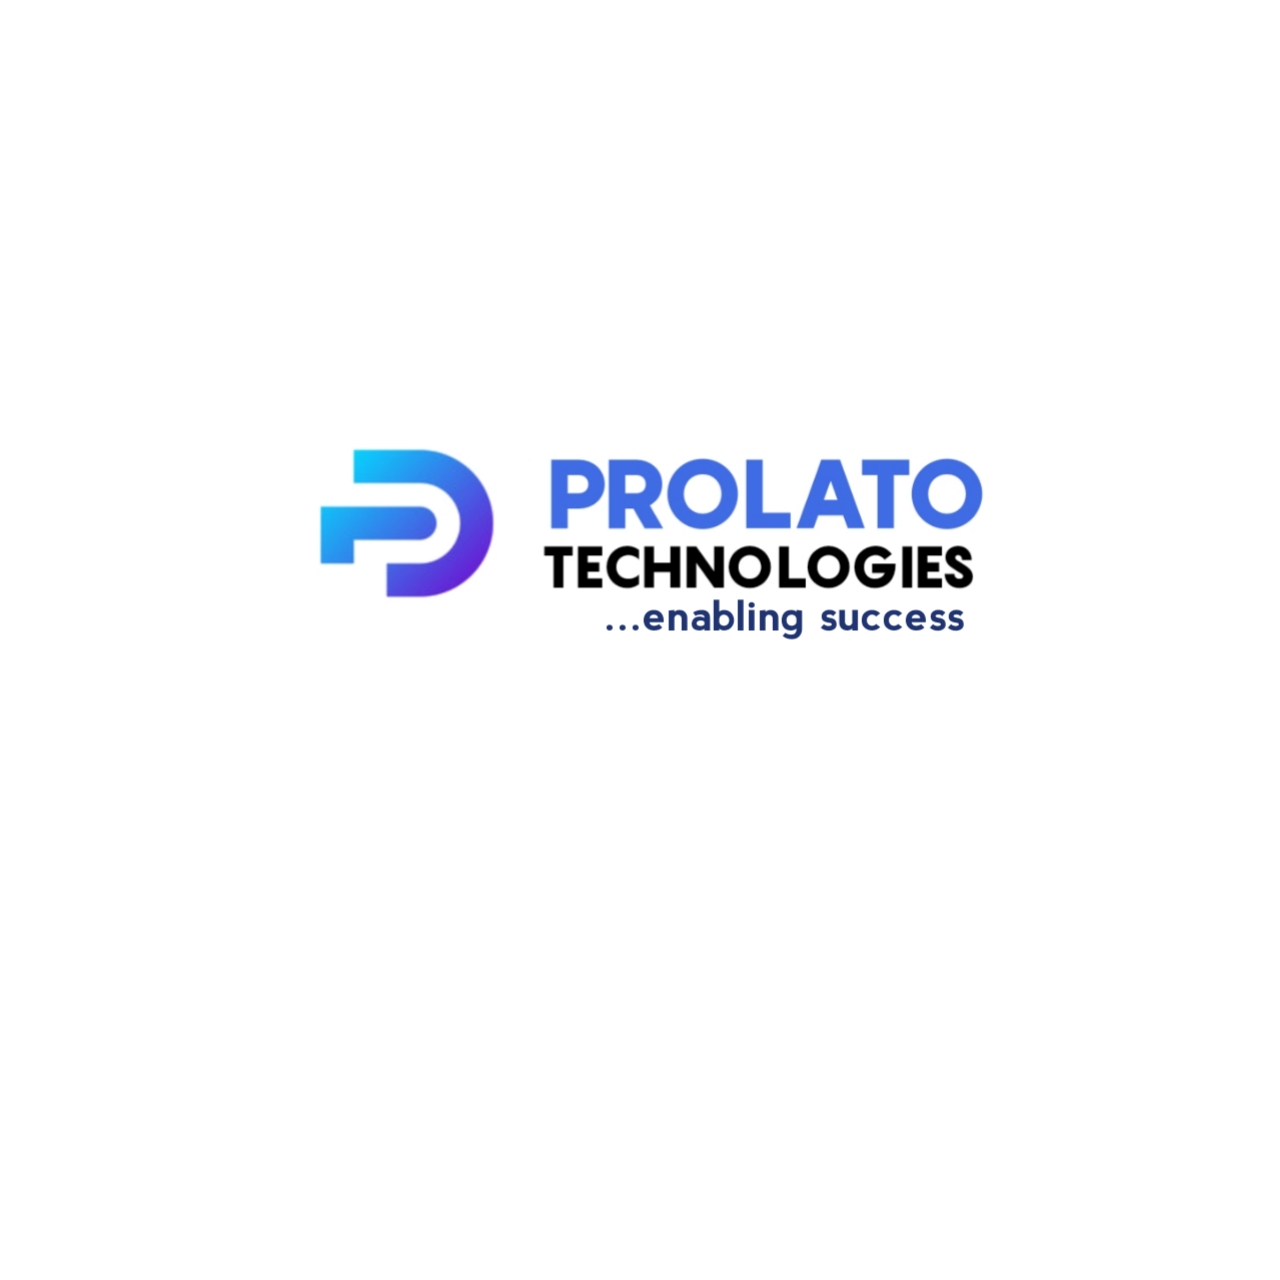 Prolato Technologies Limited in Elioplus